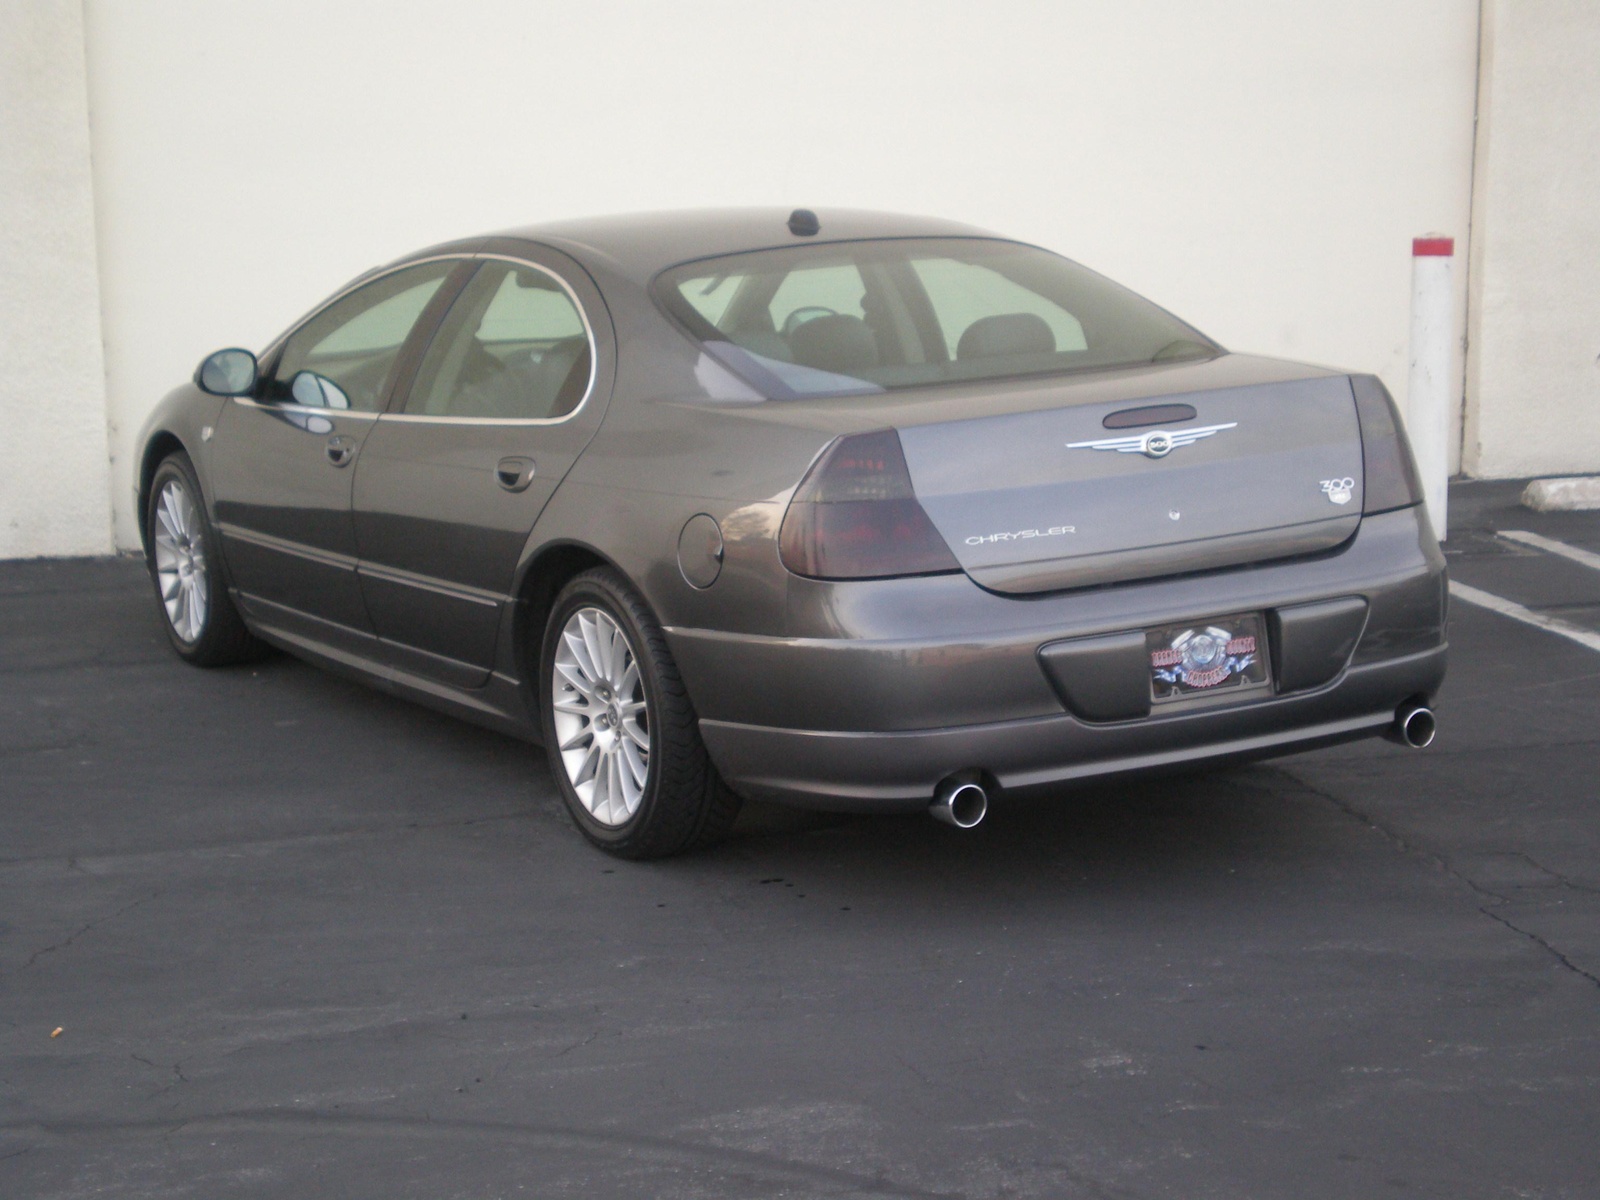 Chrysler 300m Picture 12 Reviews News Specs Buy Car